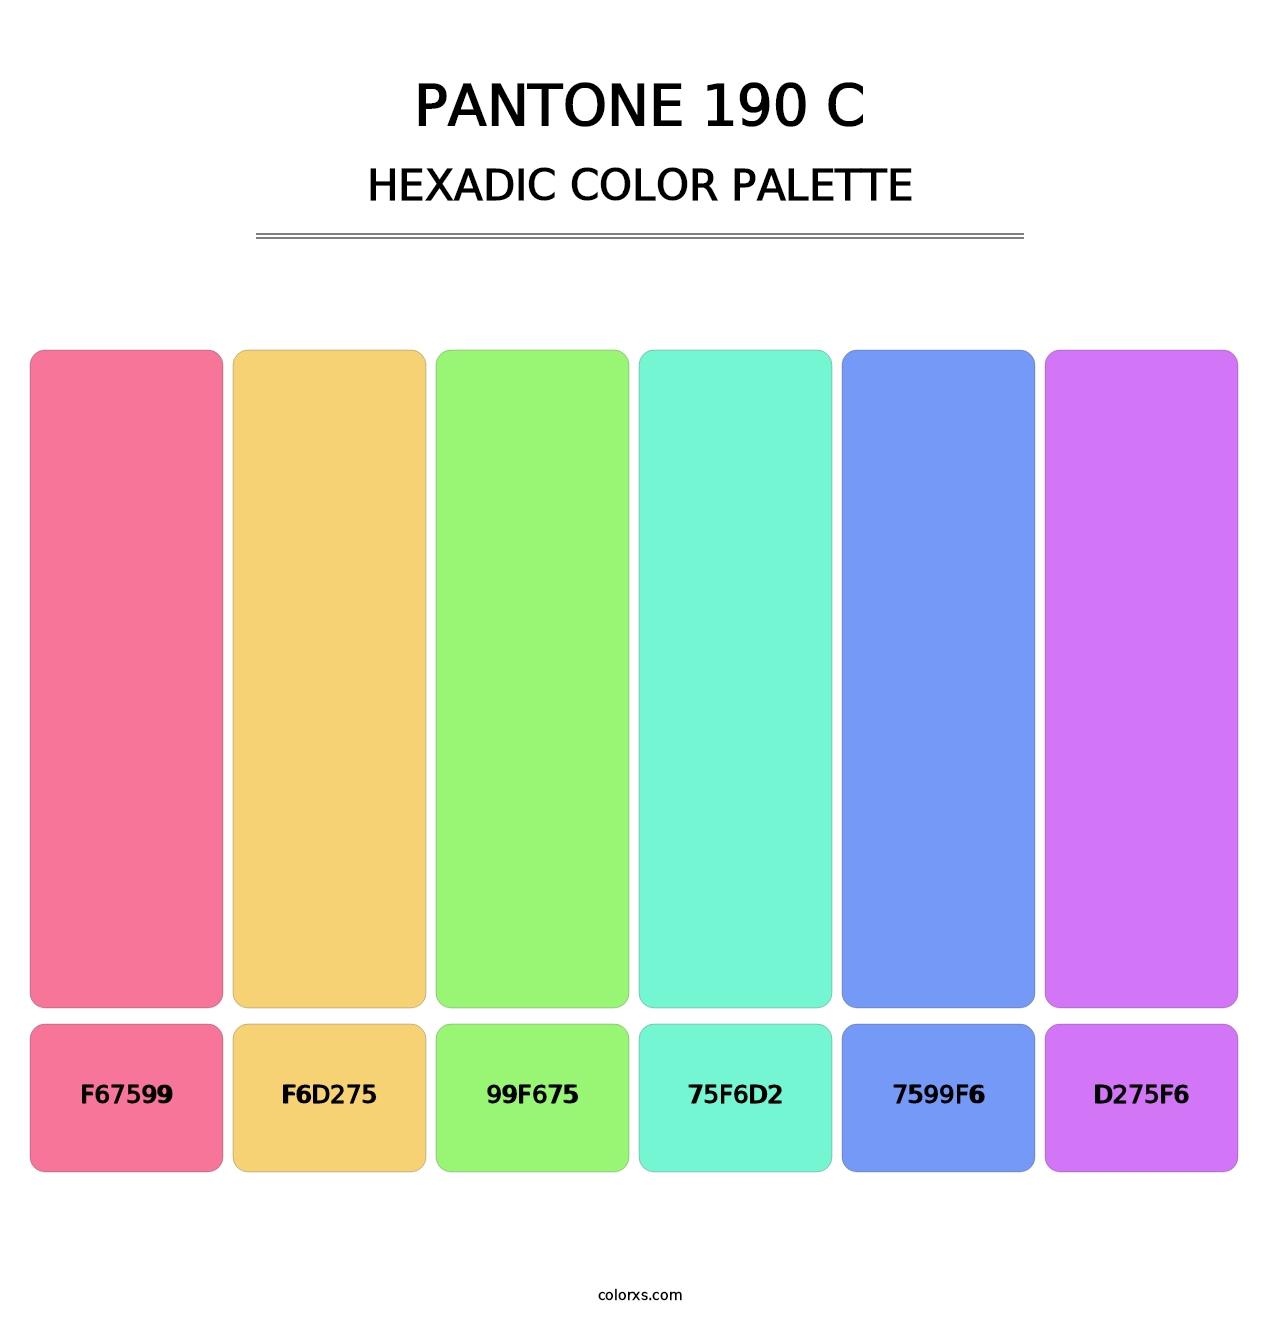 PANTONE 190 C - Hexadic Color Palette